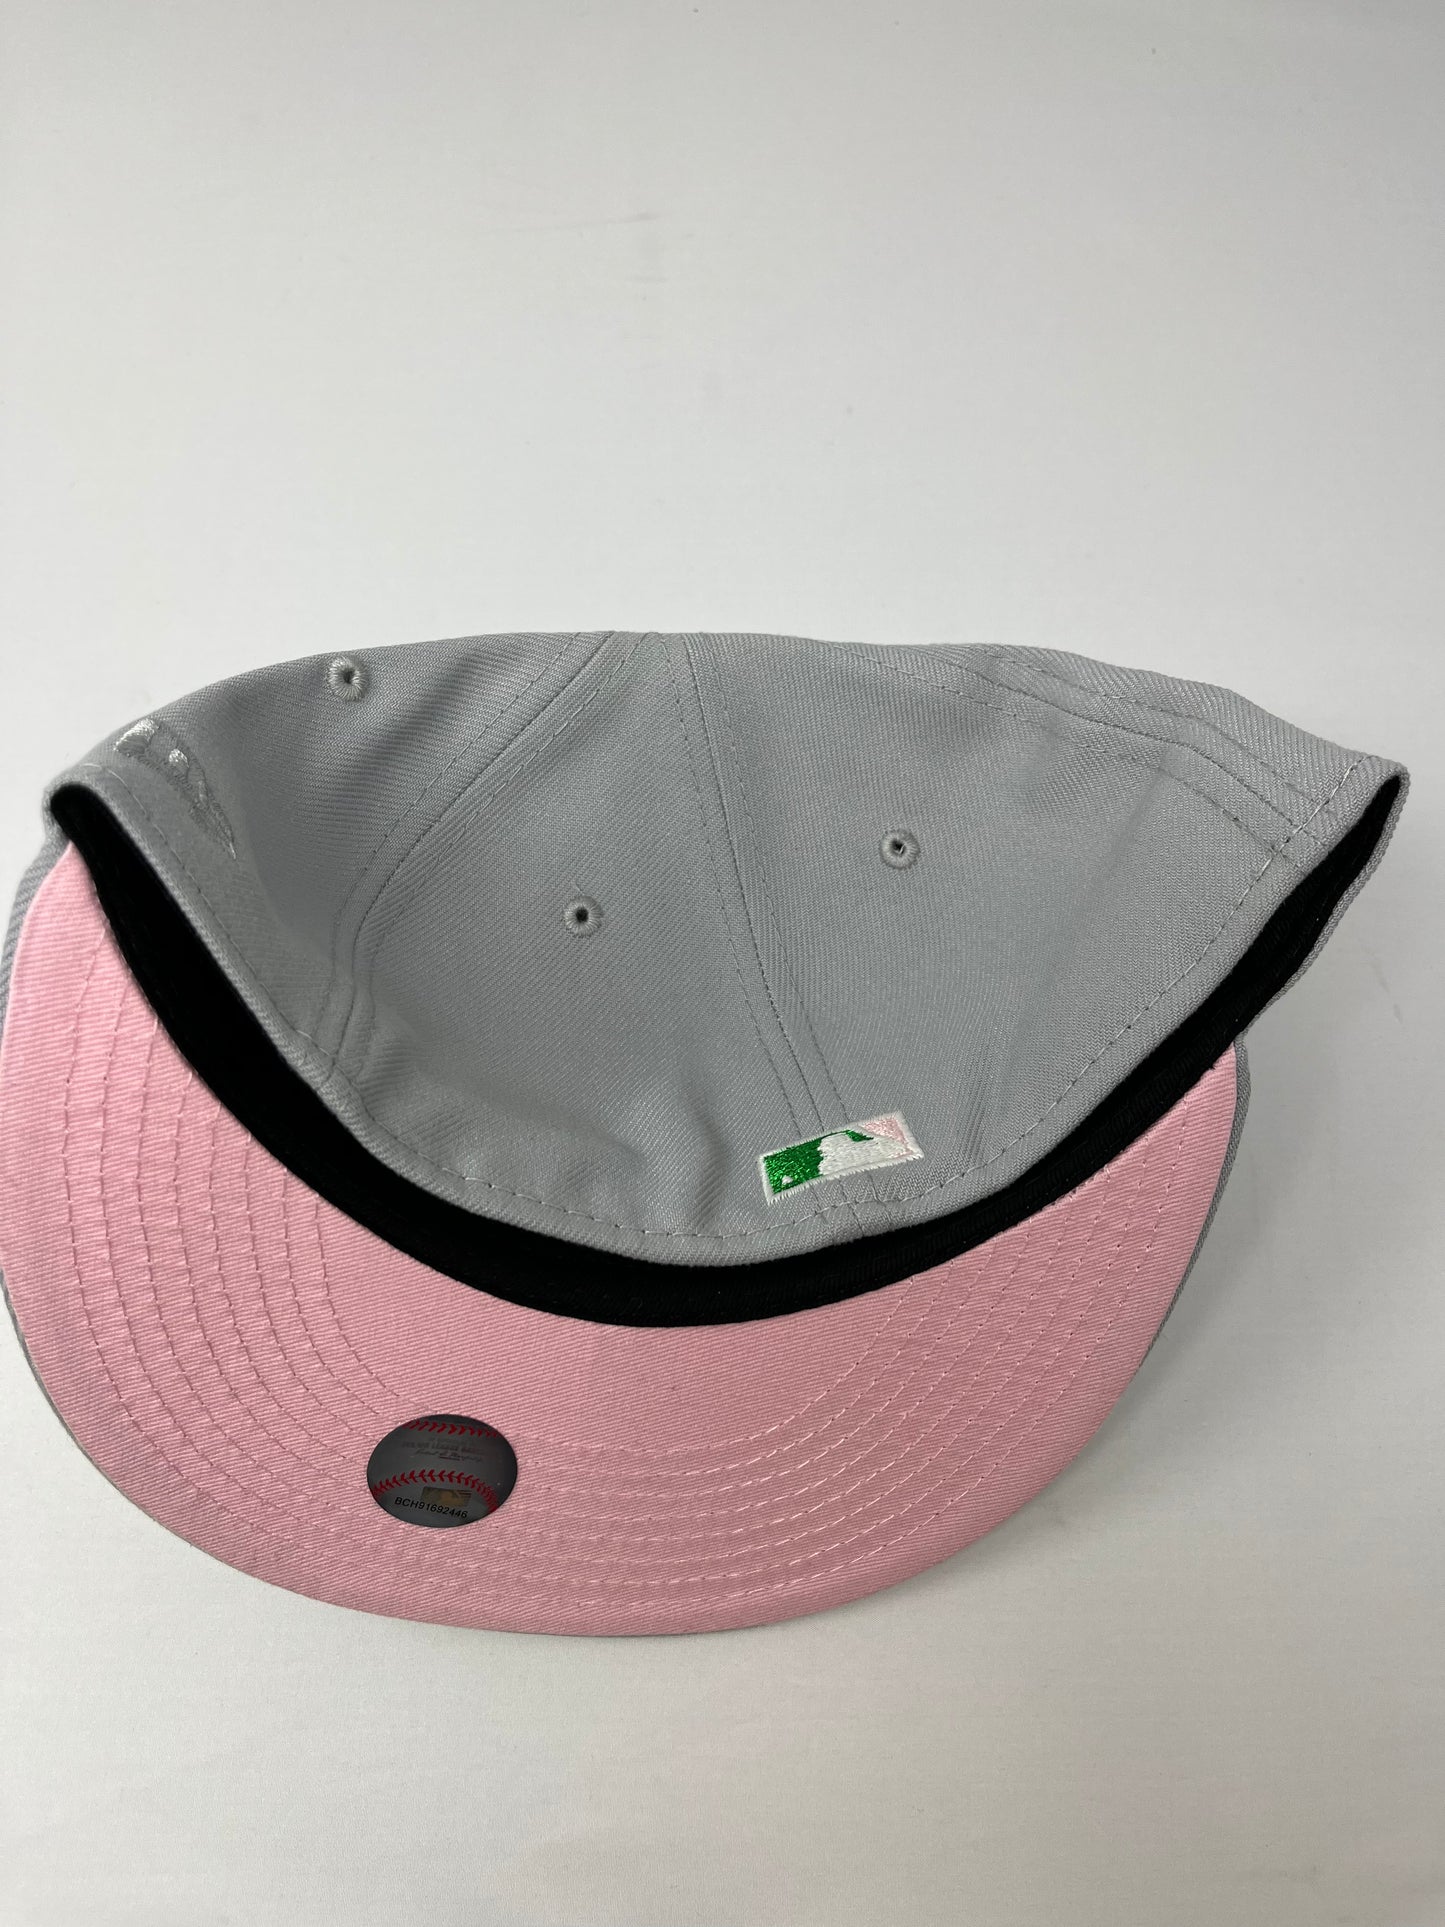 Houston Astros “Gray/Metallic Green/Pink” Hat